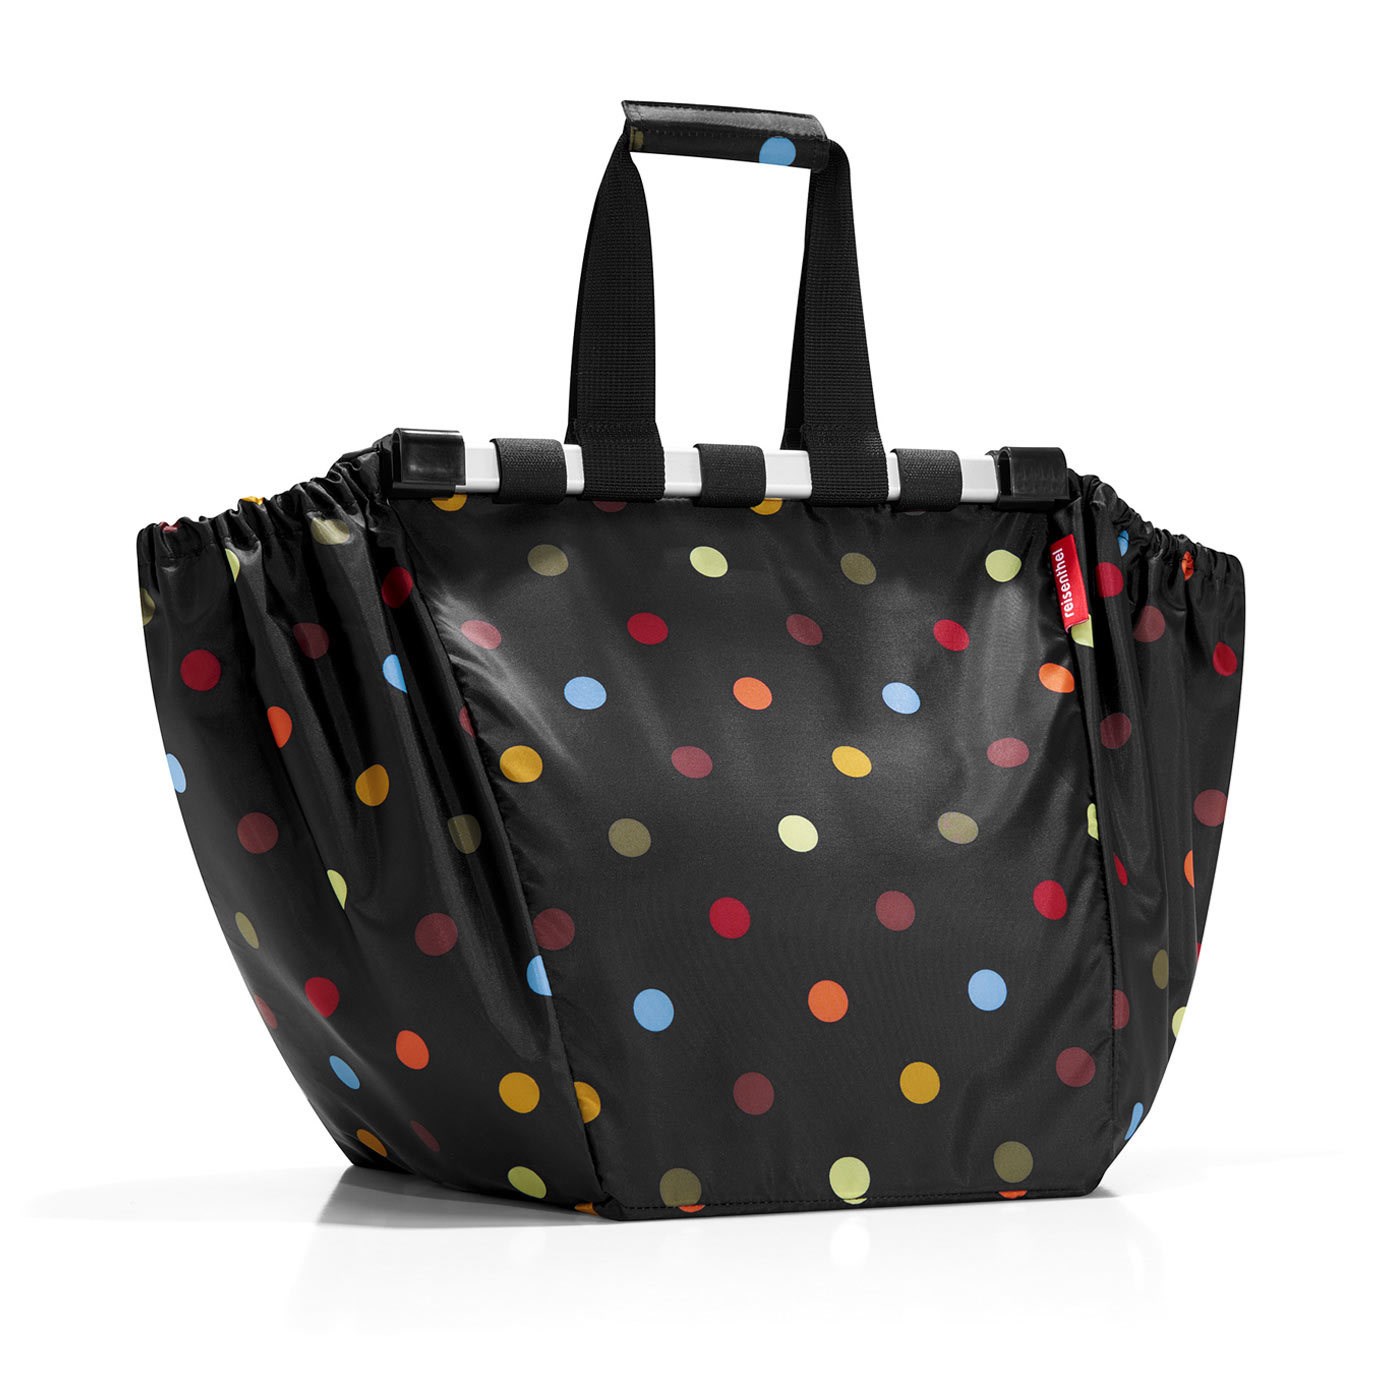 Nákupní taška do vozíku Easyshoppingbag dots_1